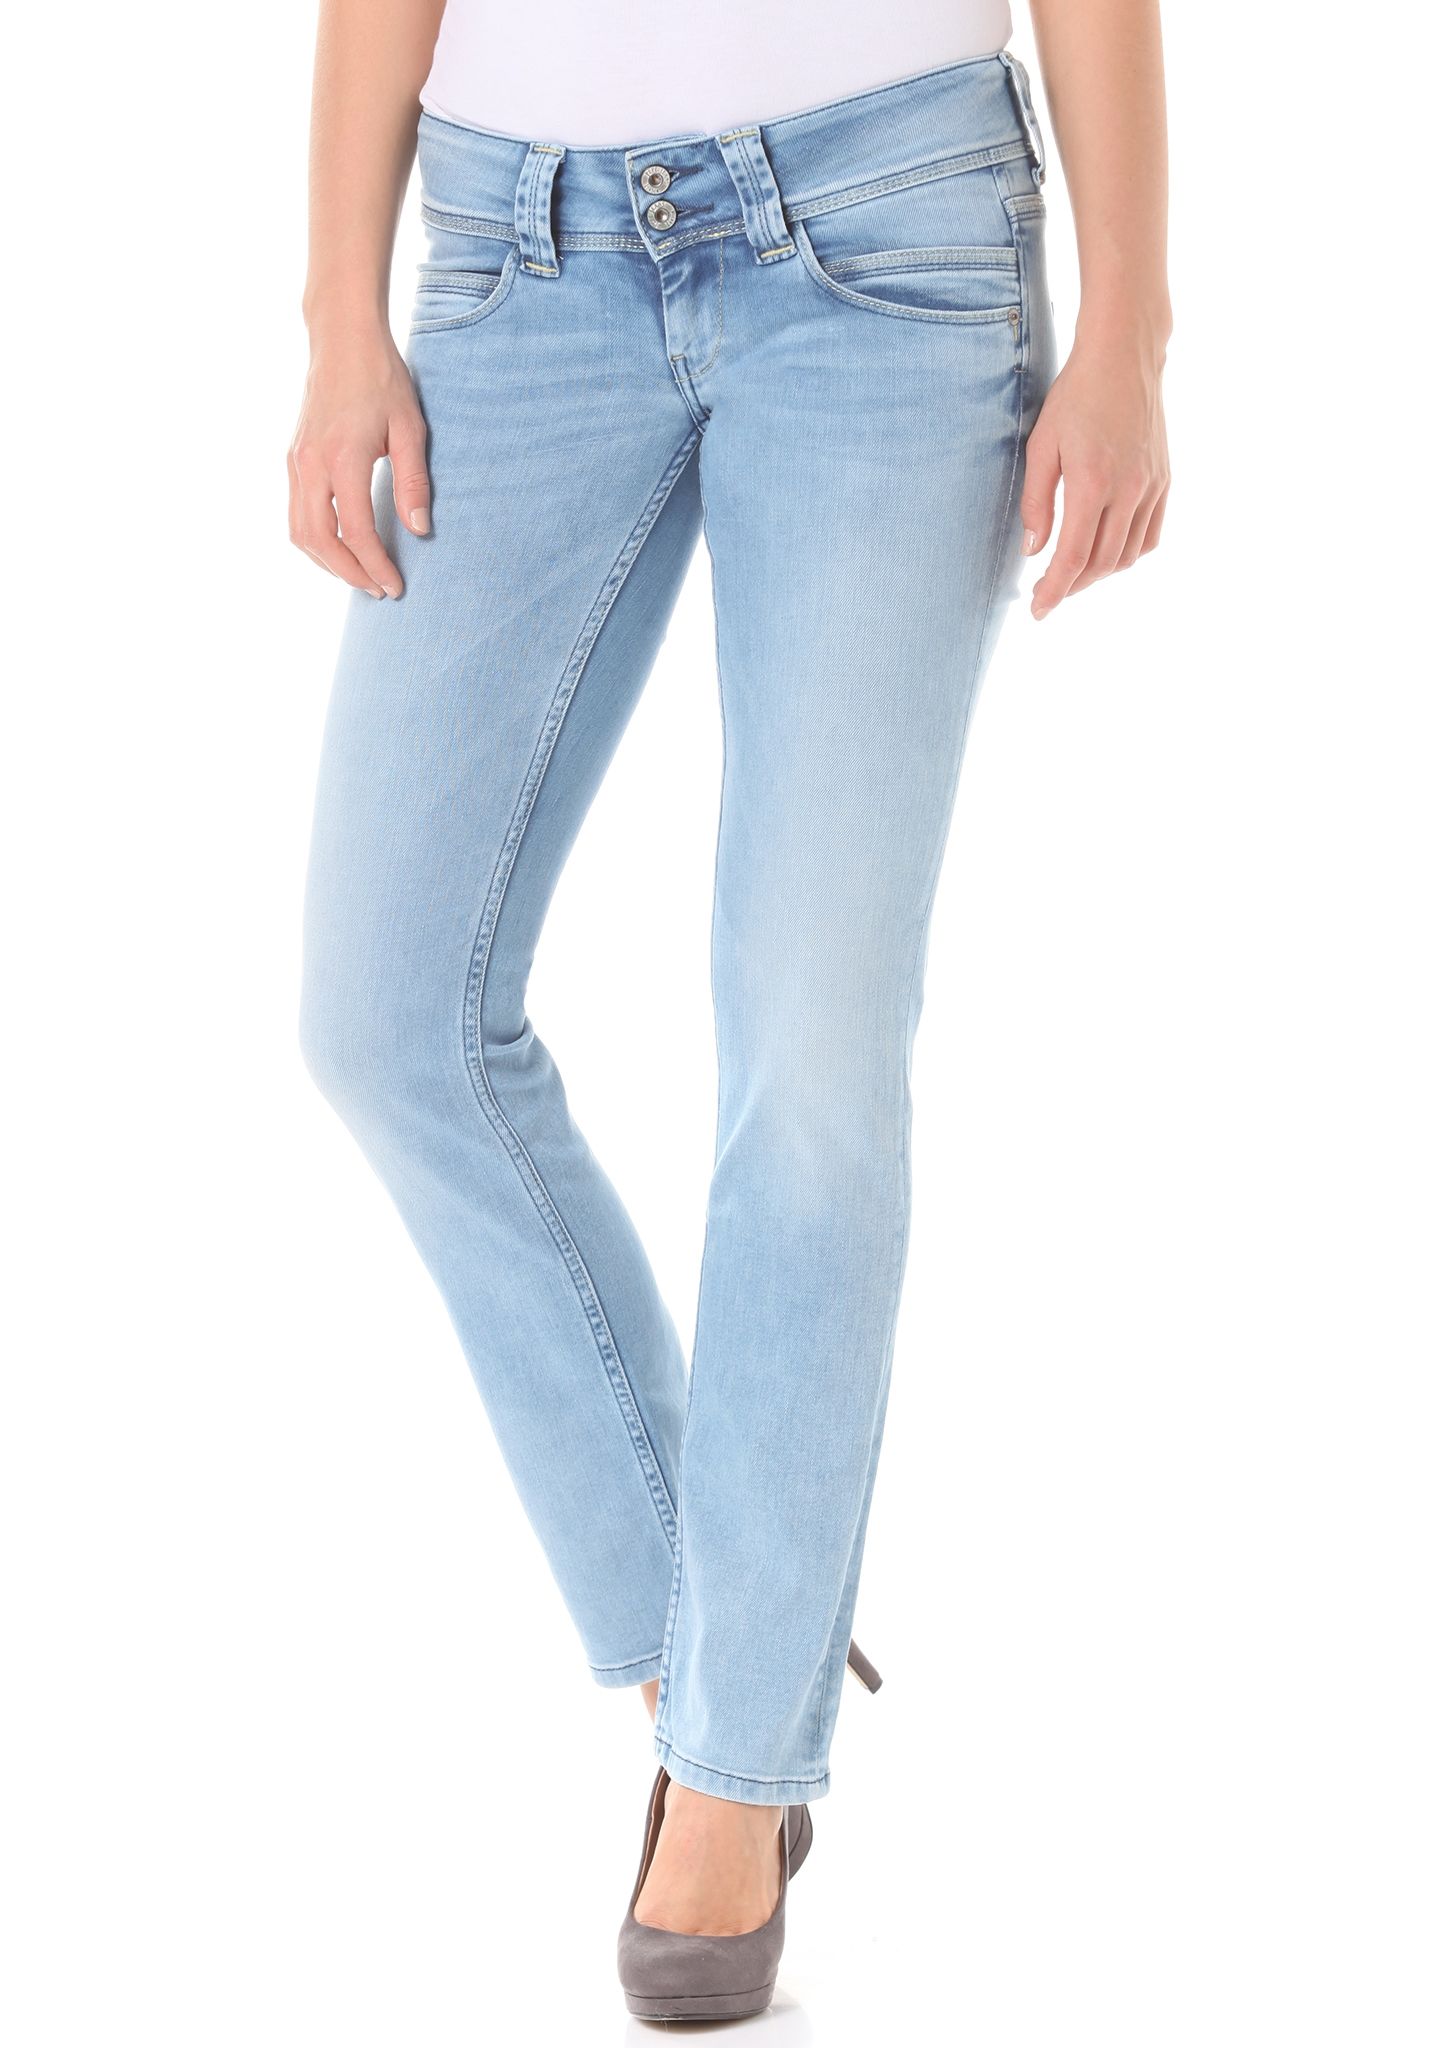 Pepe Jeans Venus pepe jeans venus - jeans jeans för kvinnor - blå - planet sport ORAVGEA